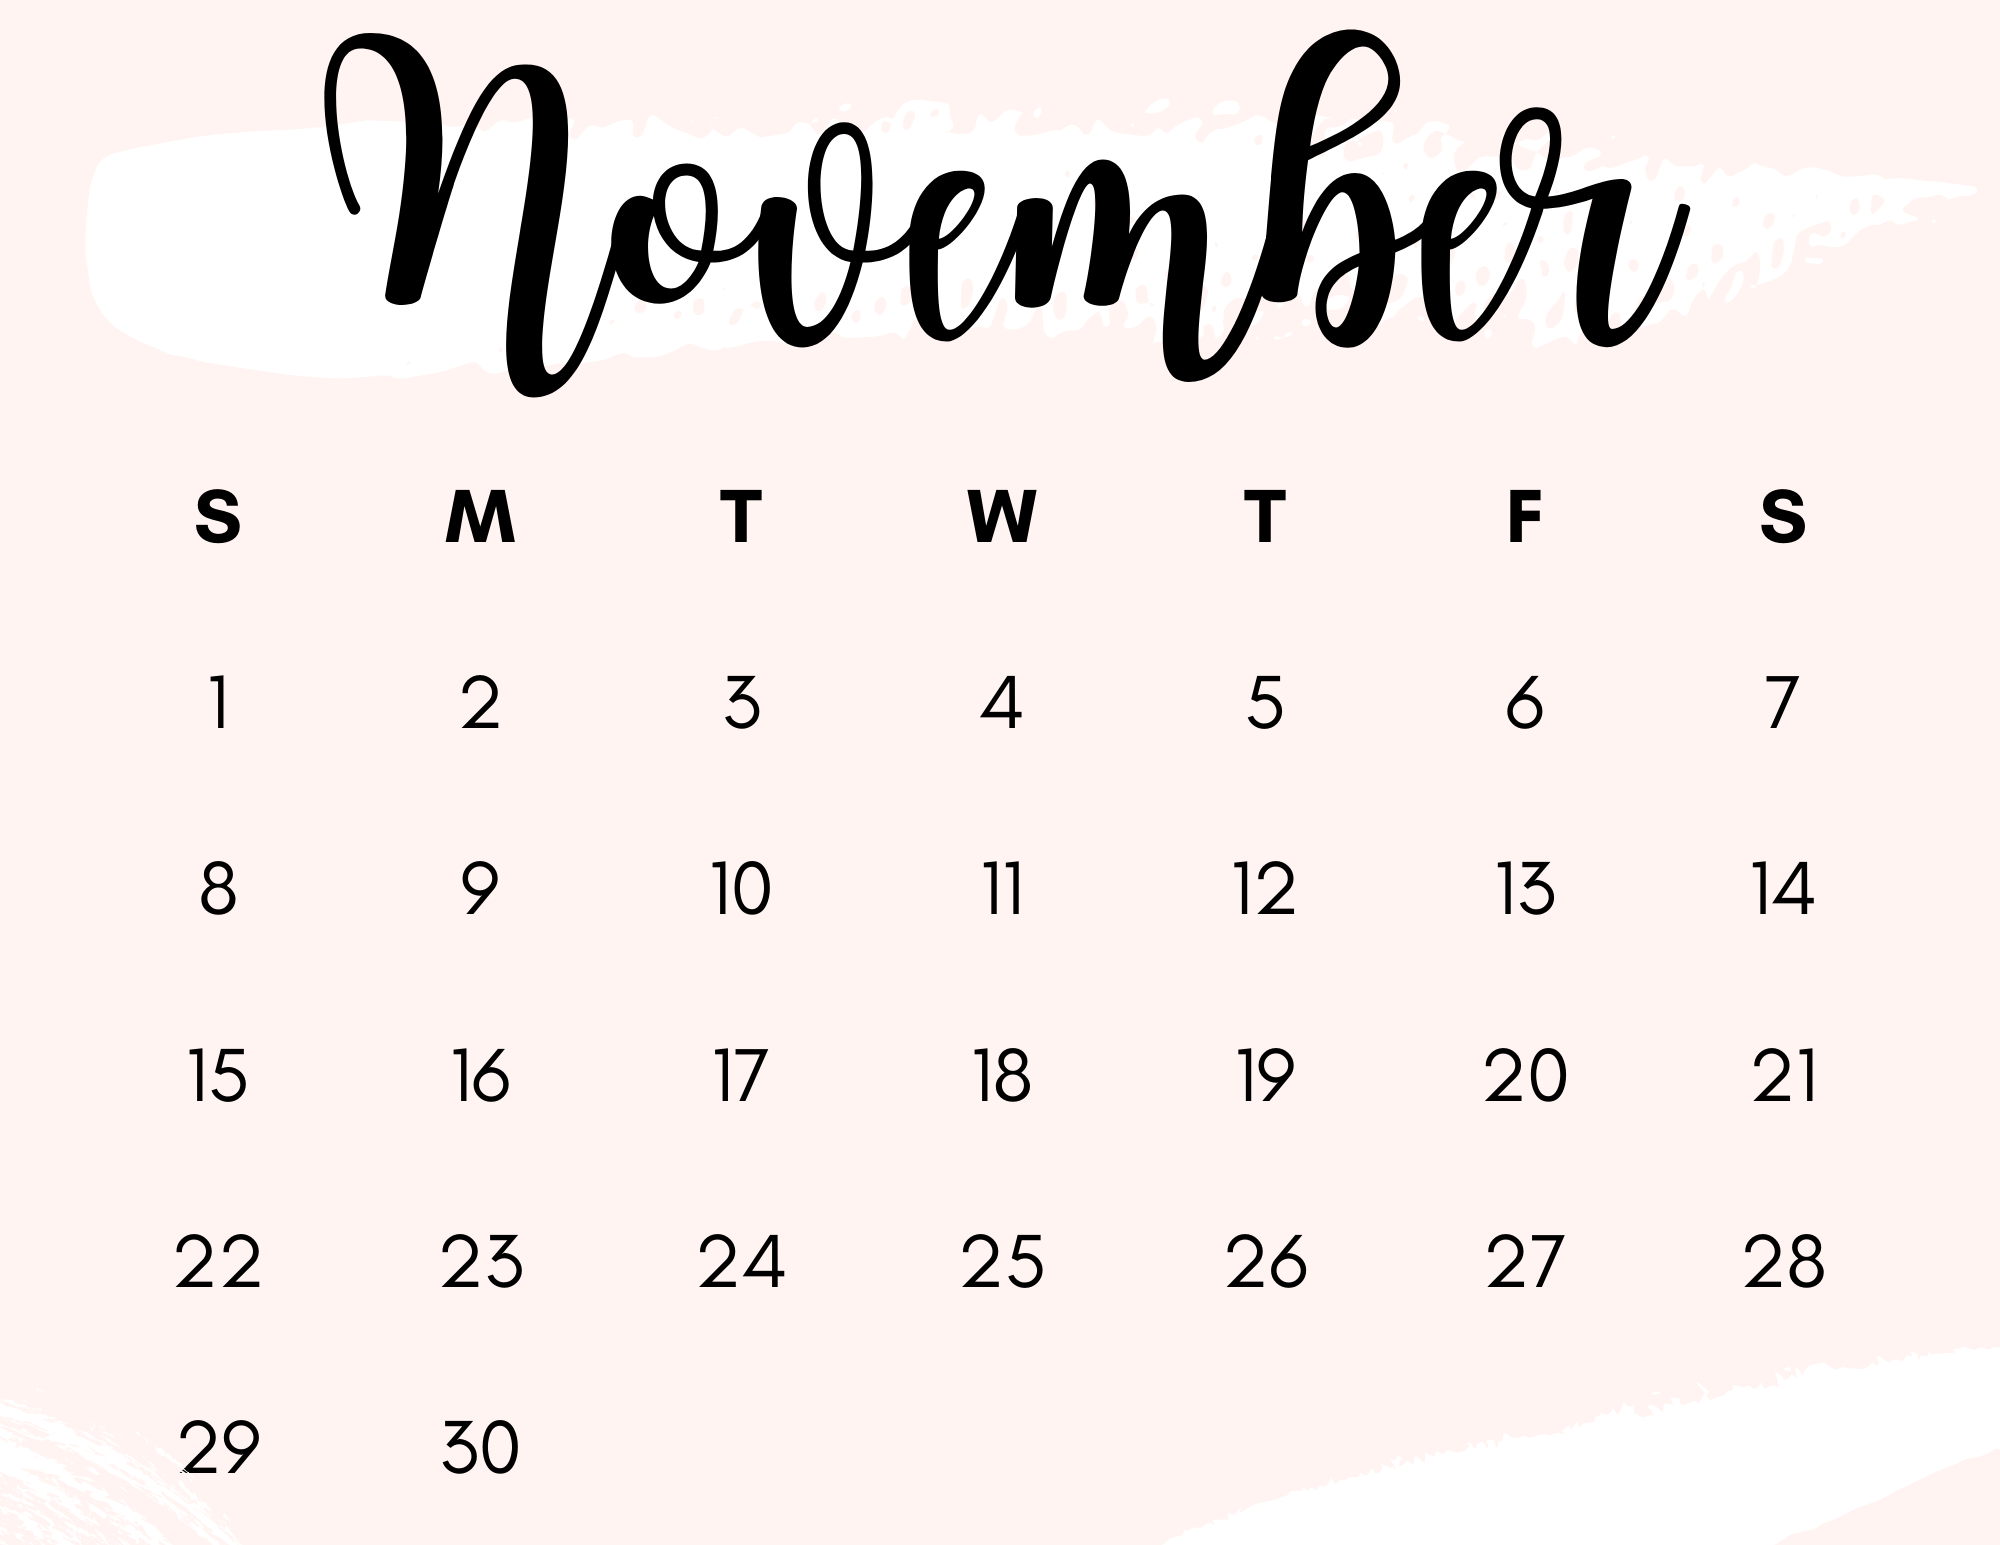 November 2020 Calendar 10 Free Printable Designs